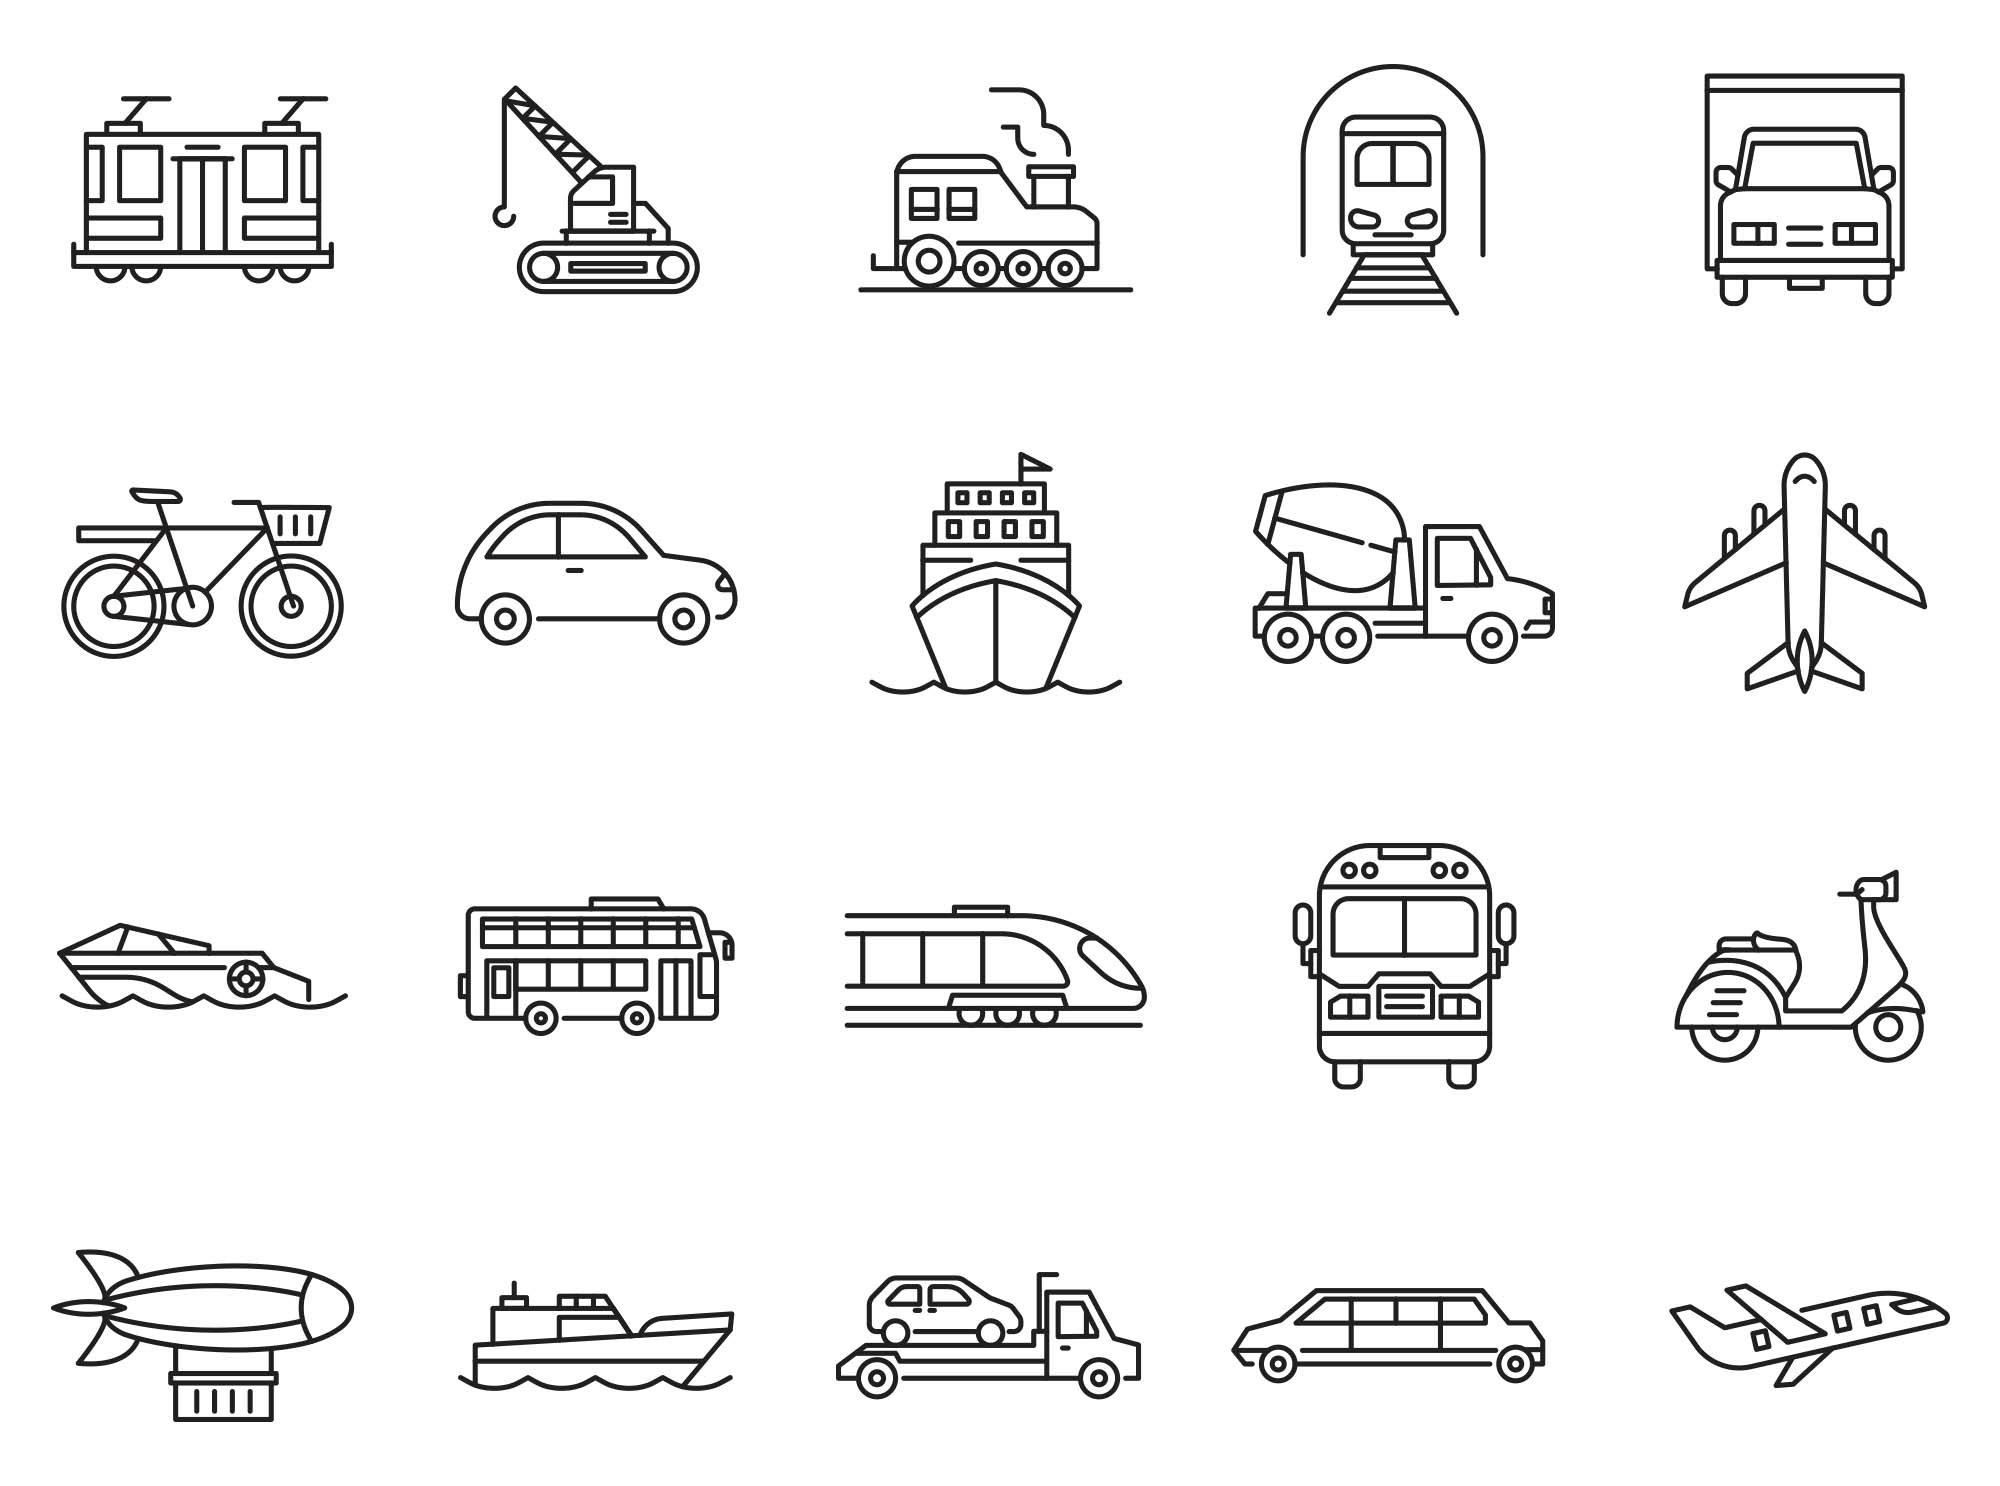 80个交通工具图标 80 Transportation Icons 图标素材 第2张